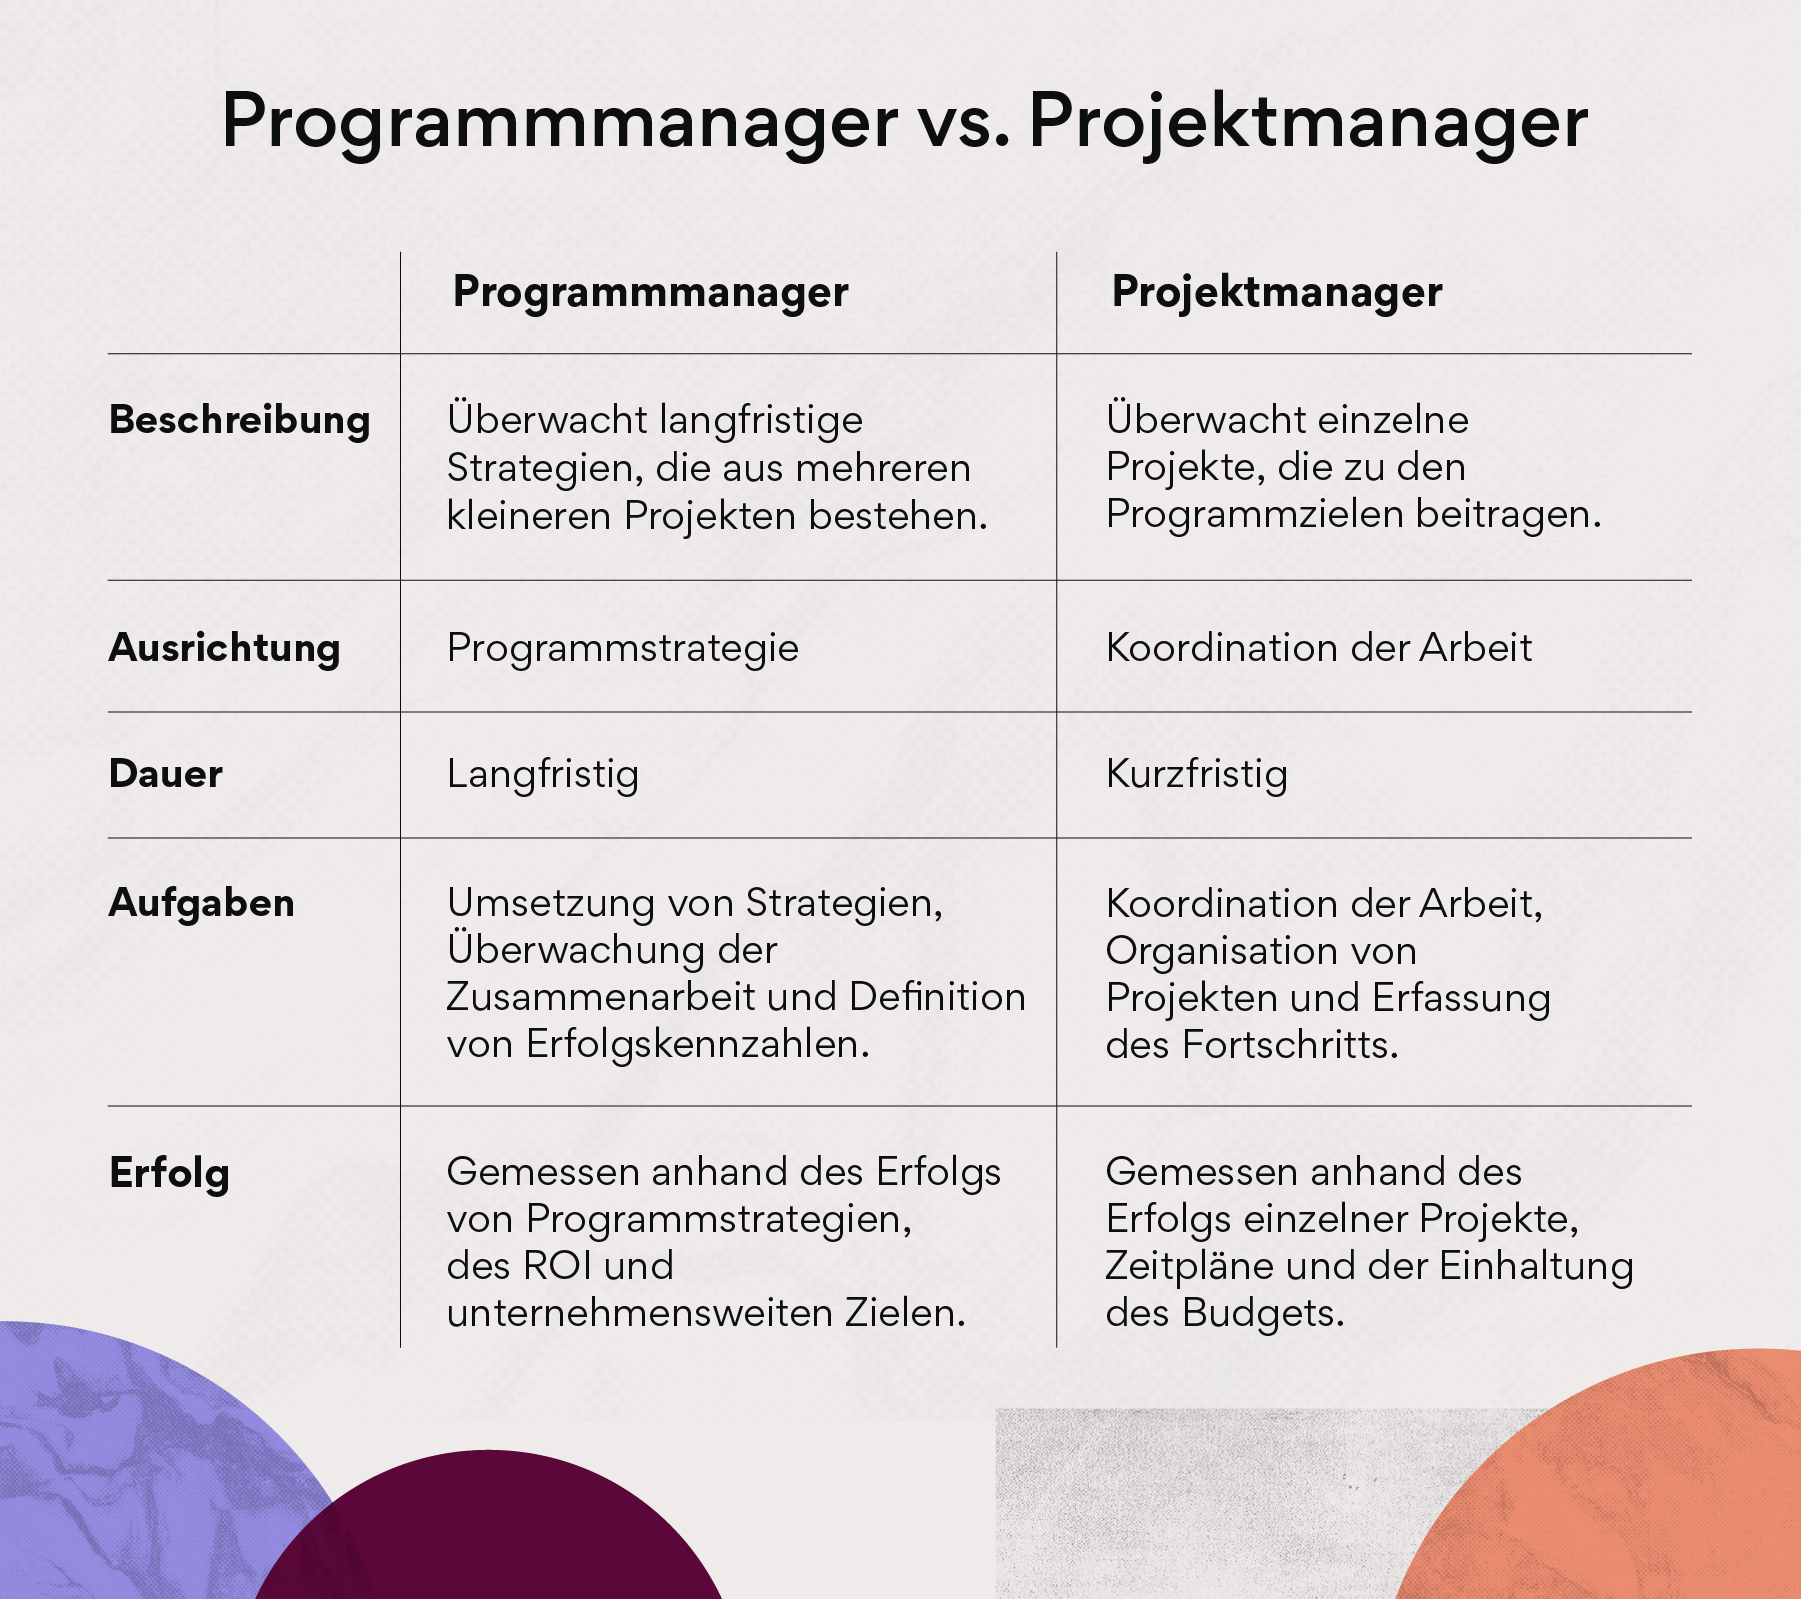 Programmmanager vs. Projektmanager